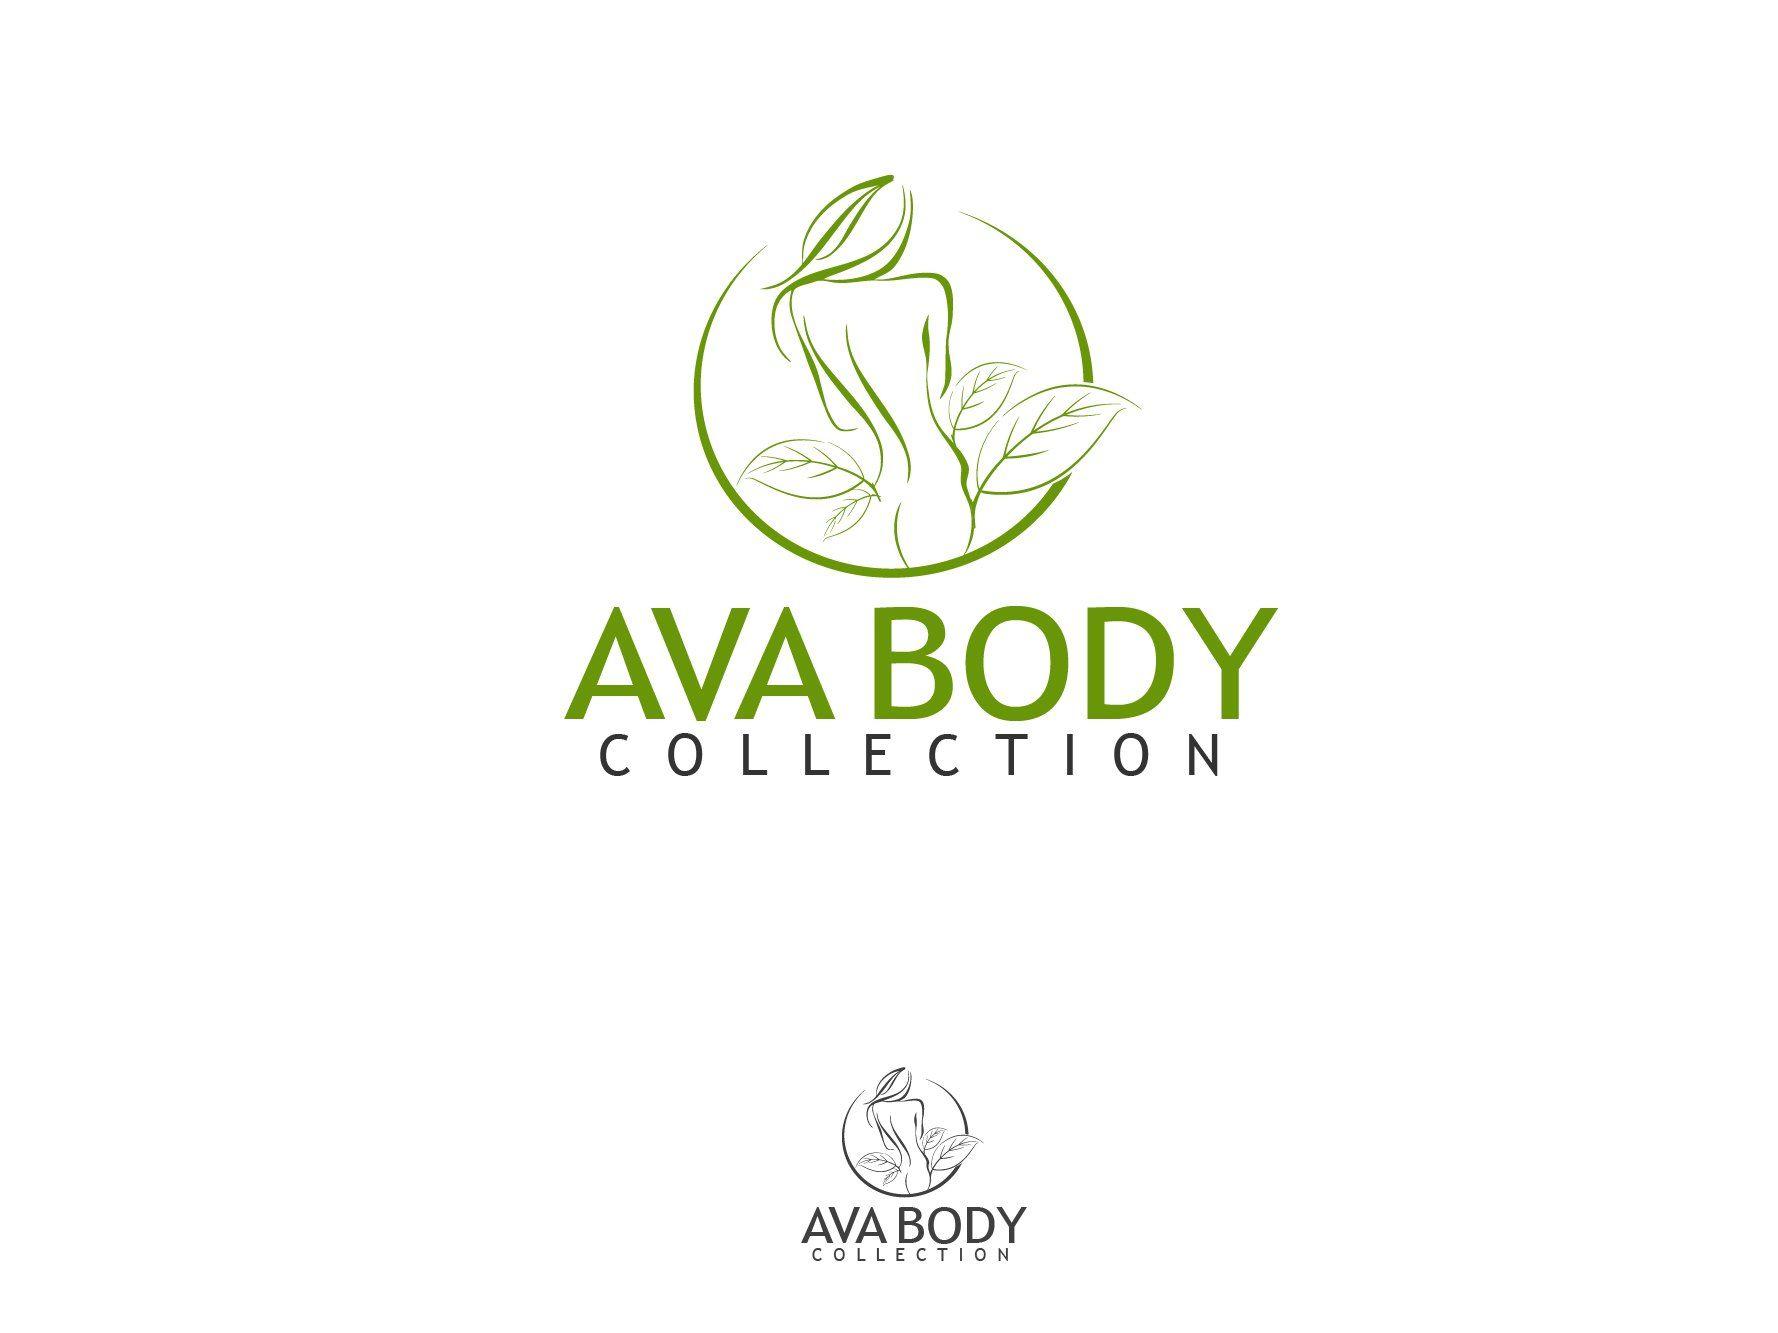 Body Care Logo - DesignContest needed for new natural skin care company logo